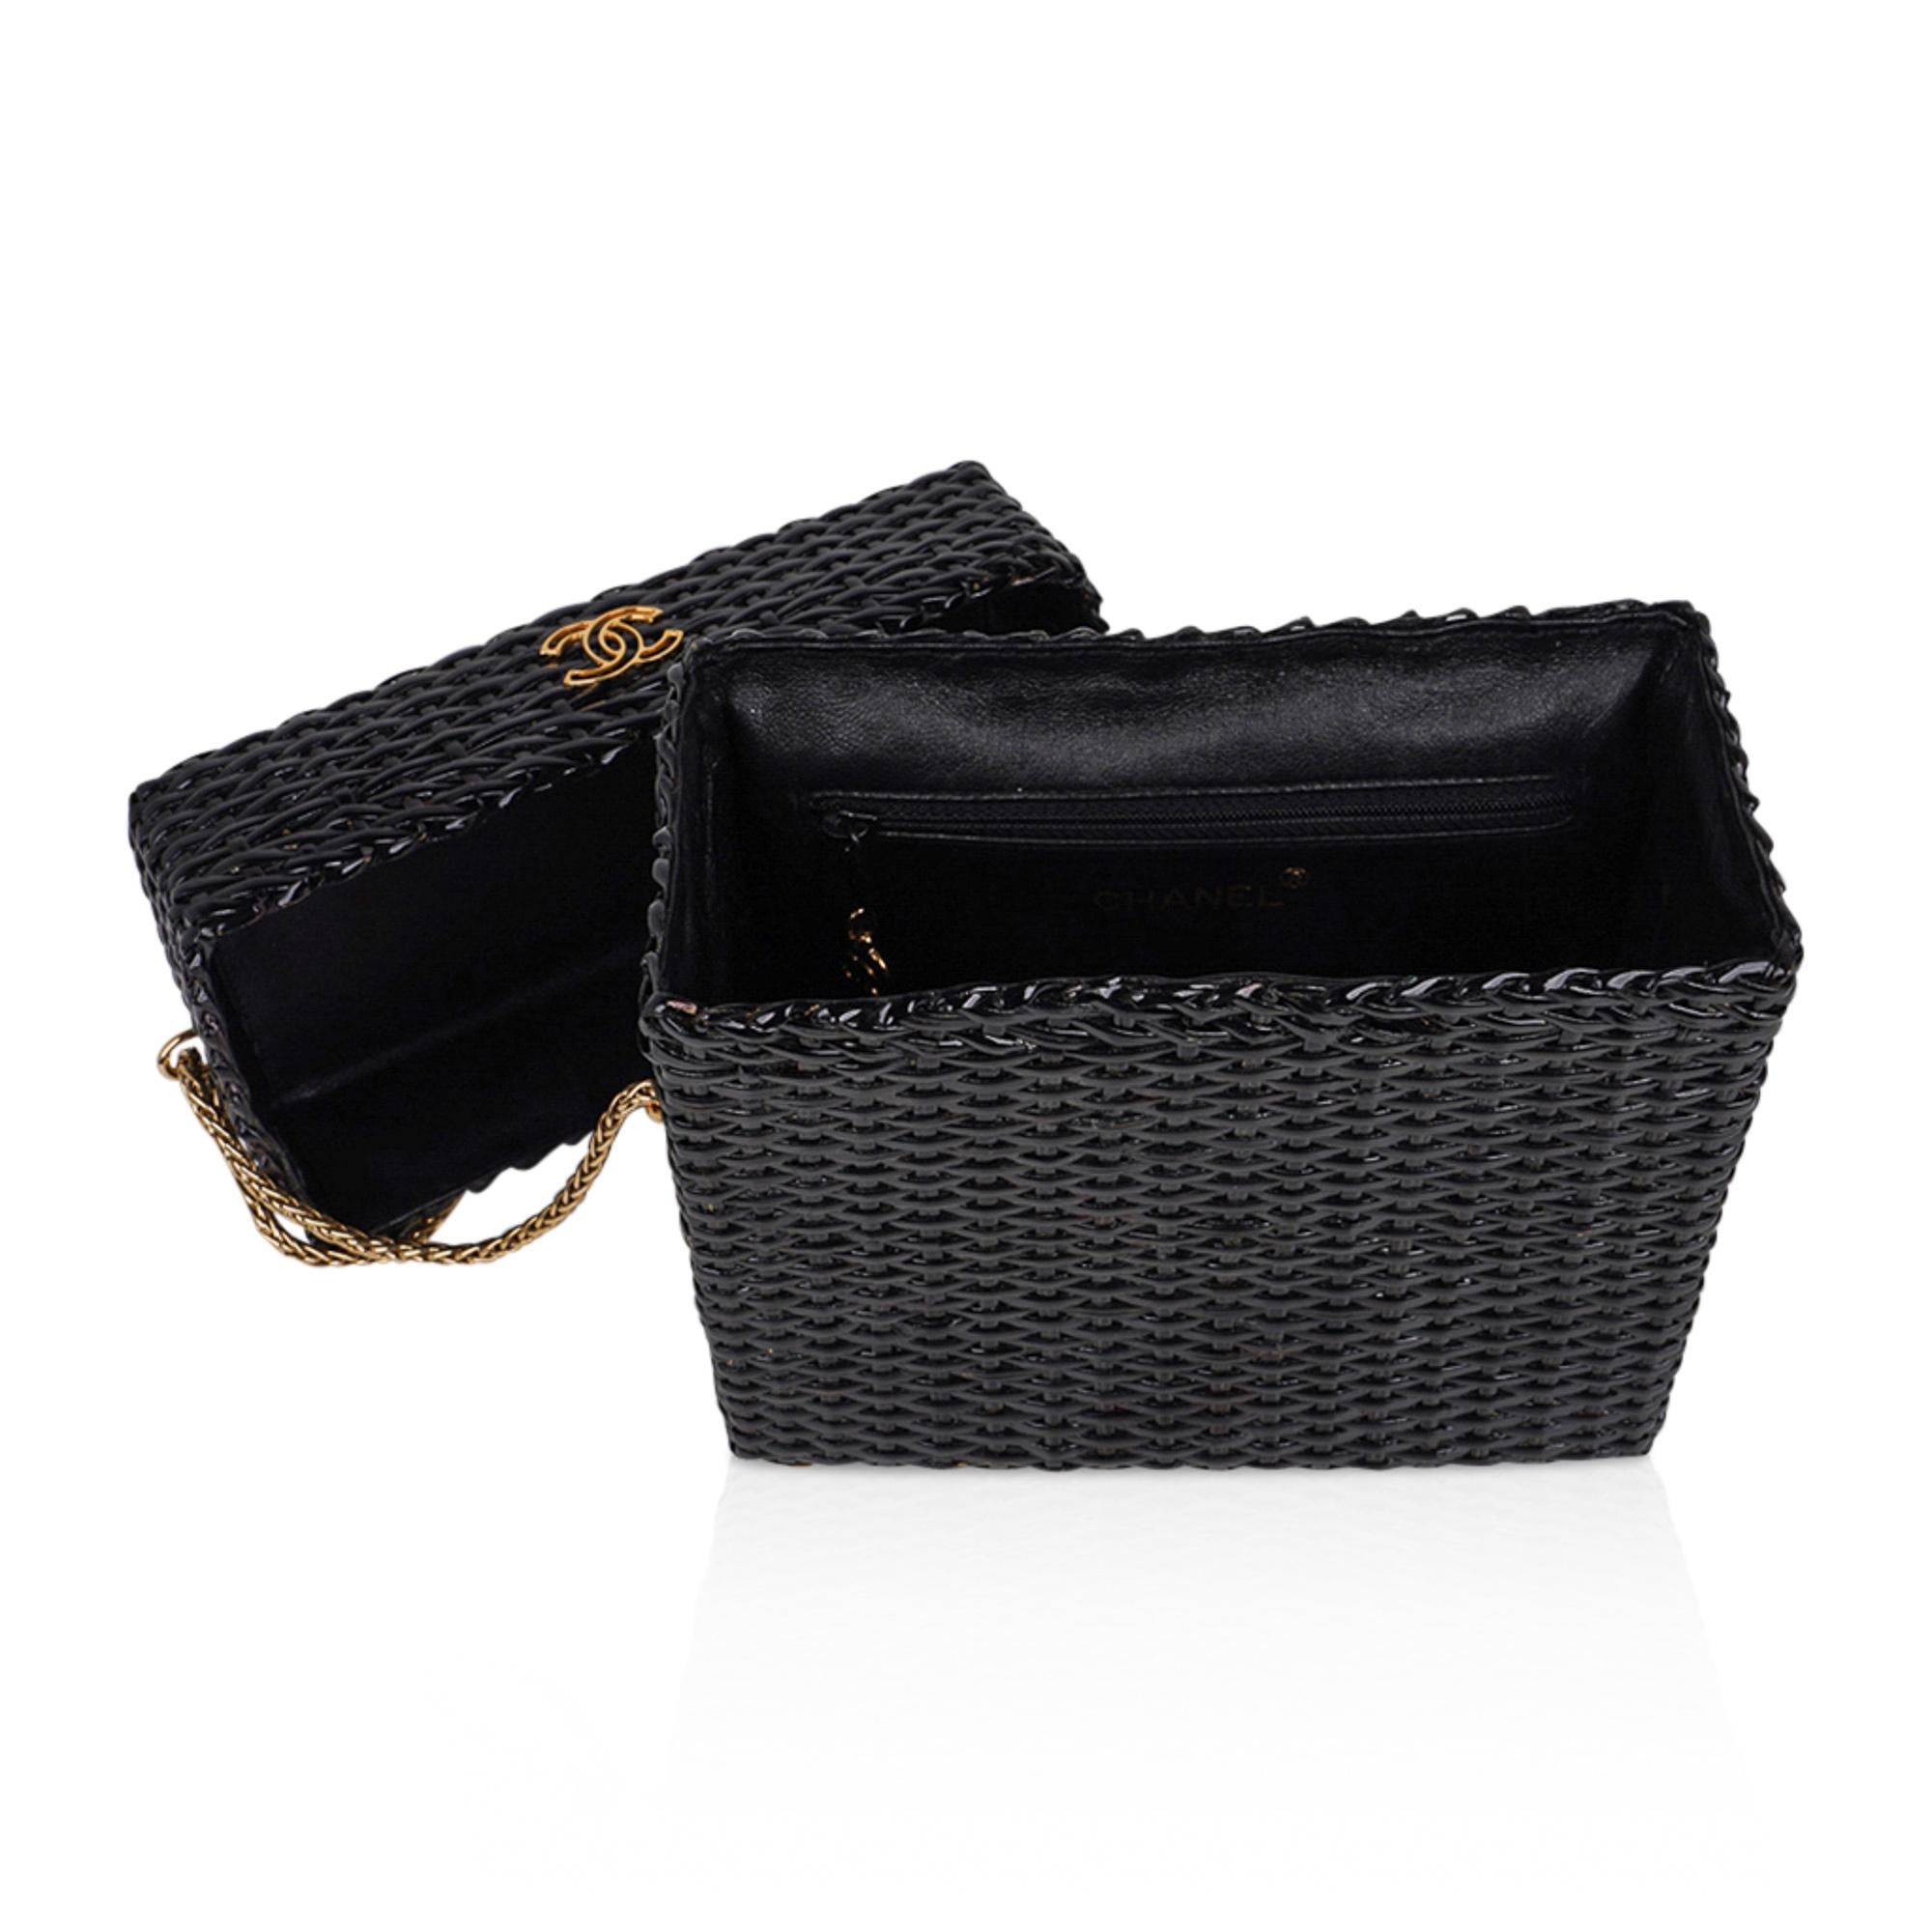 Chanel Bag Black Vintage Wicker Picnic Lunch Basket Gold Chain Strap 5